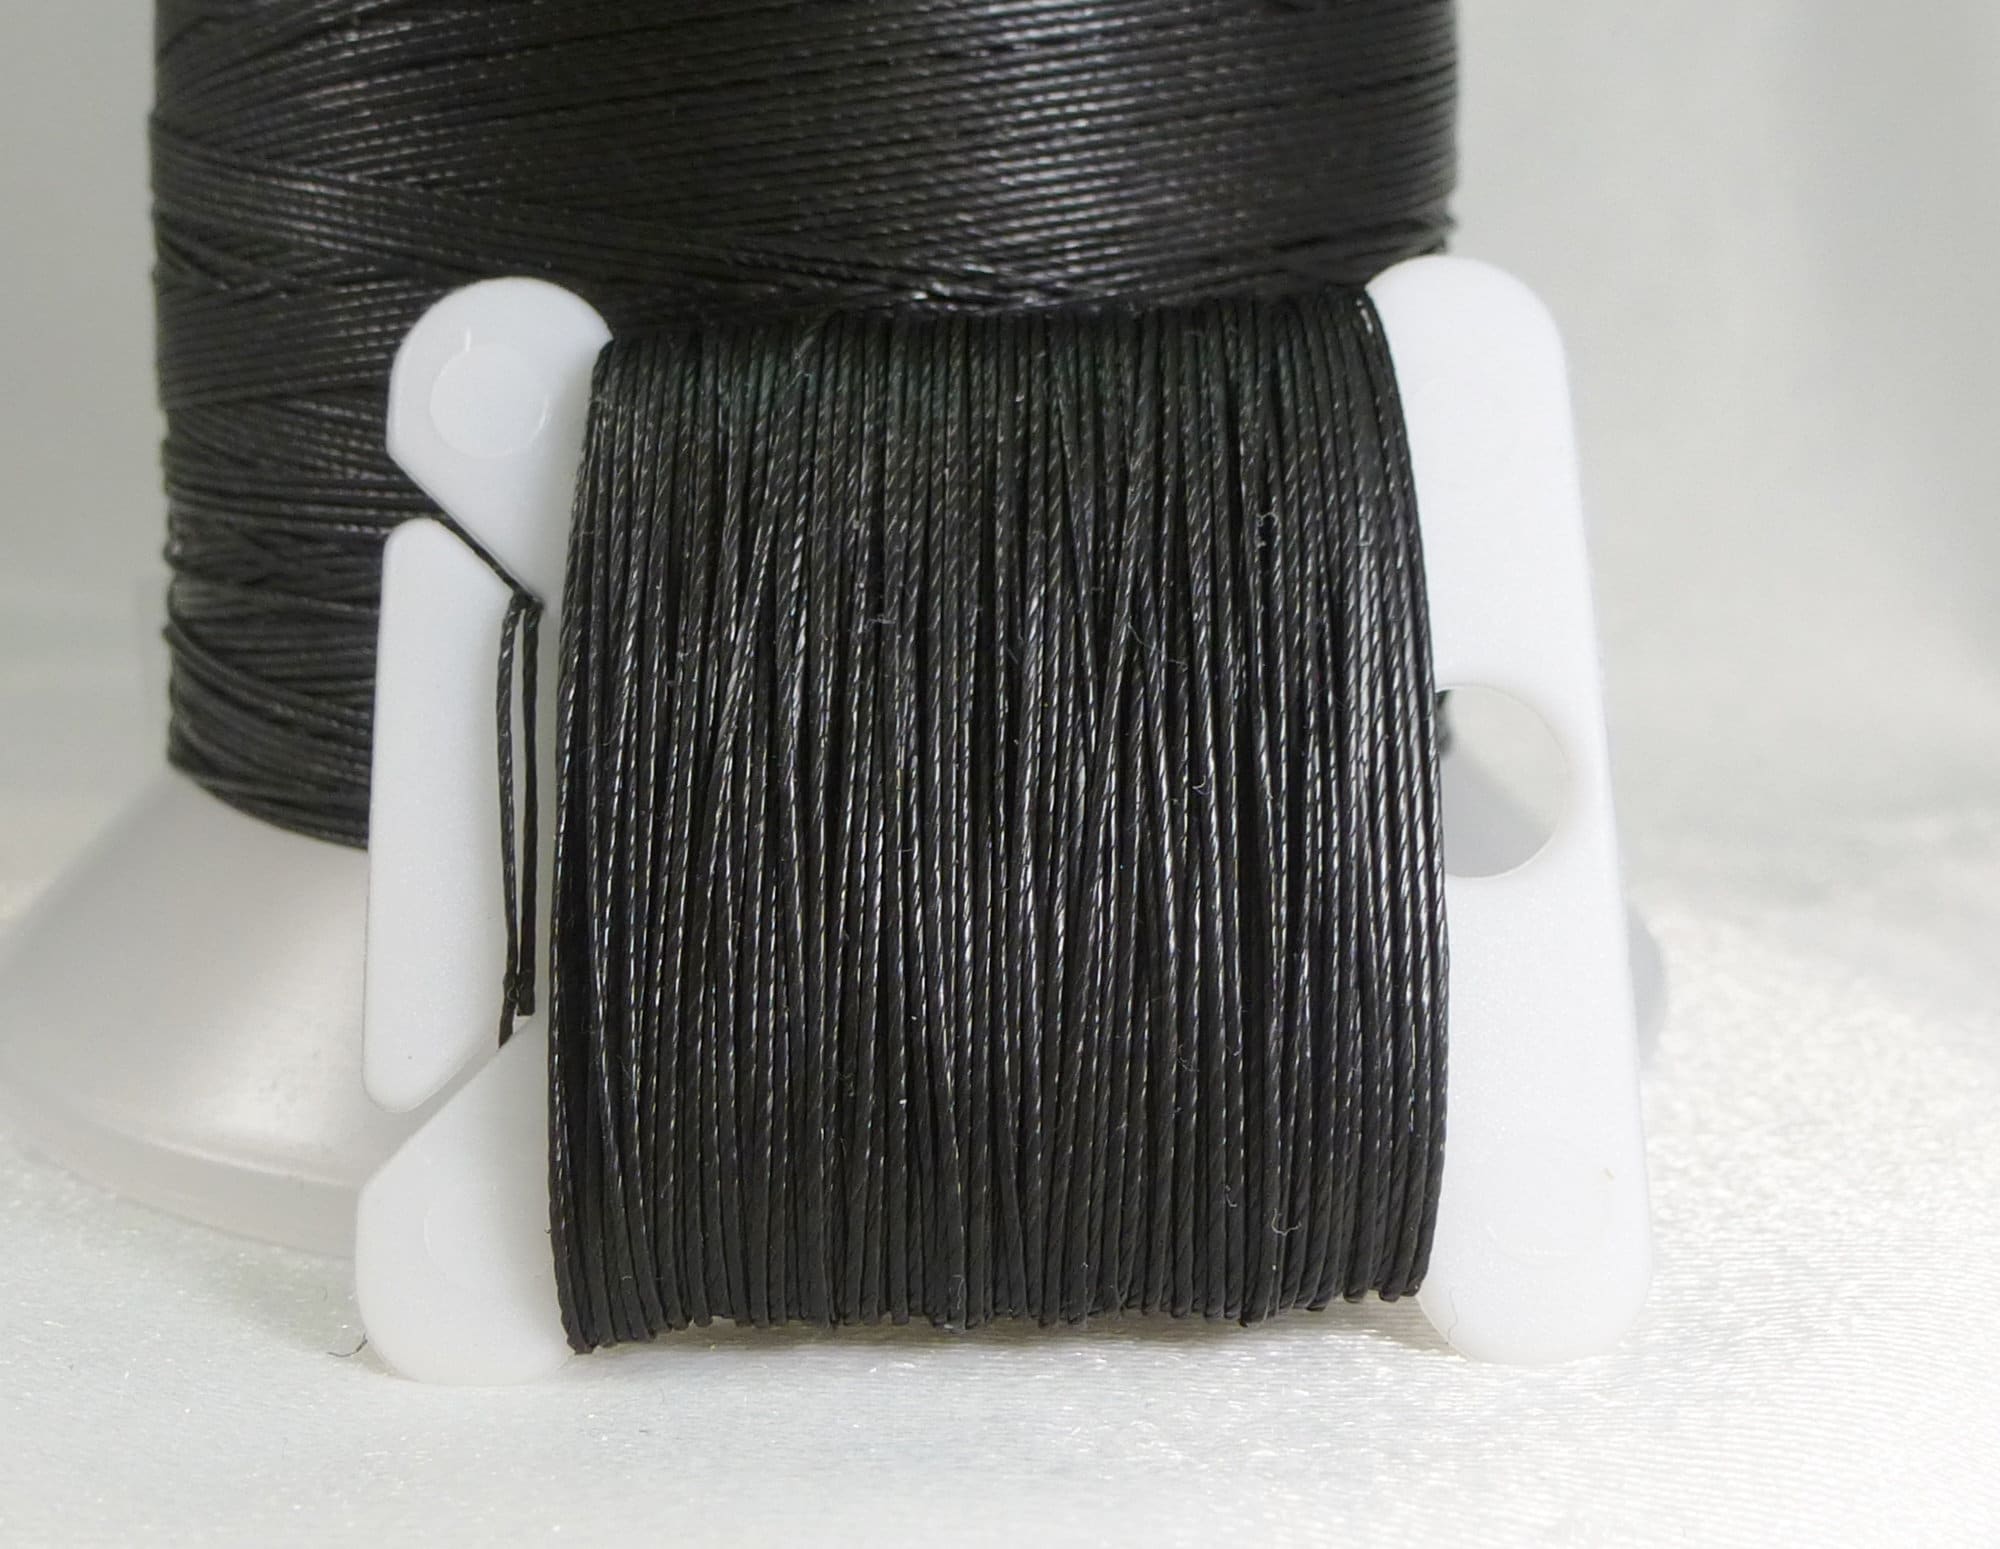  Black Nylon Braided Cord Extra Strong Multi-Use Thread